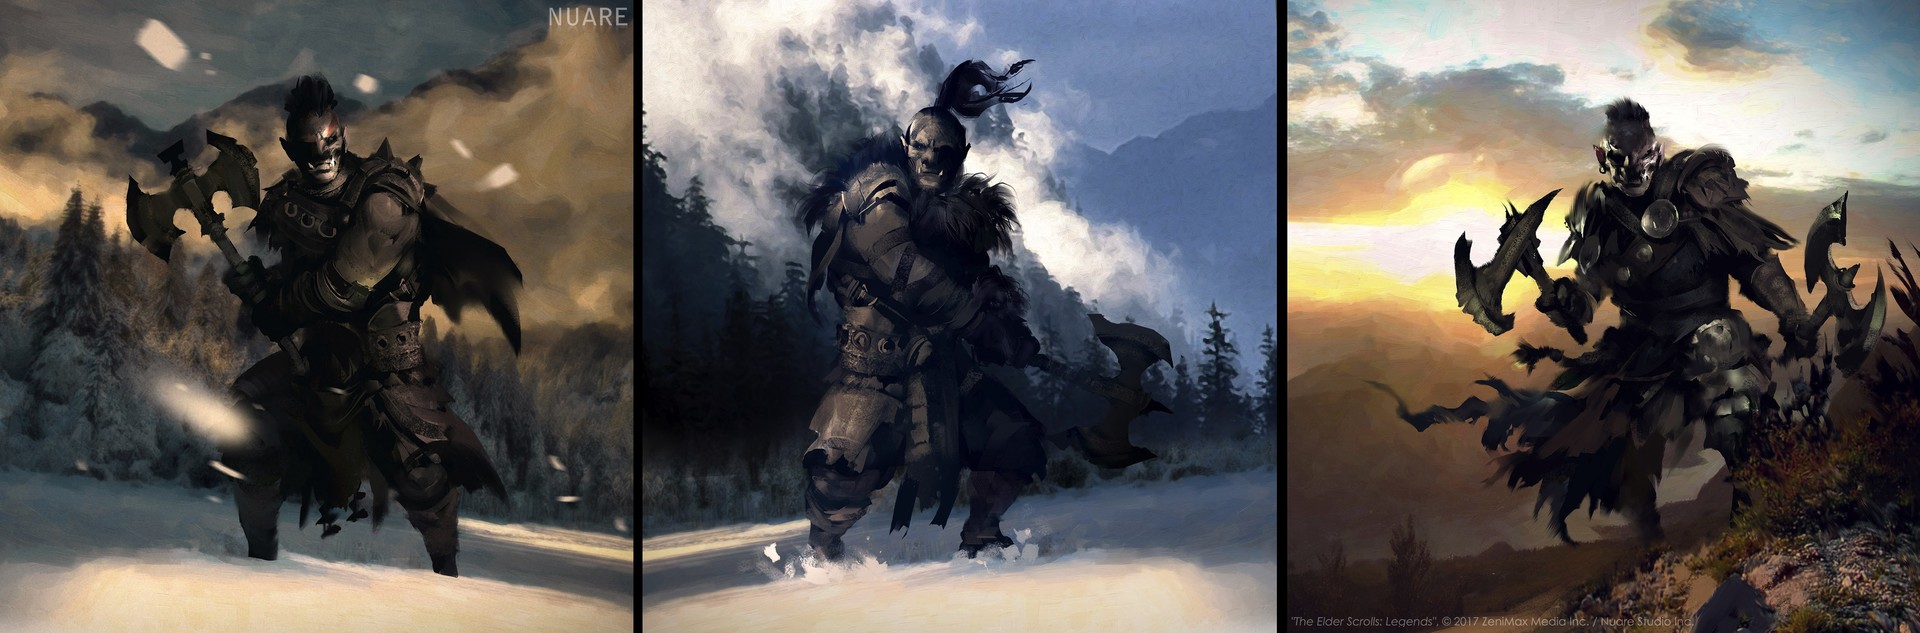 The Elder Scrolls: Legends Art by Nuare Studio